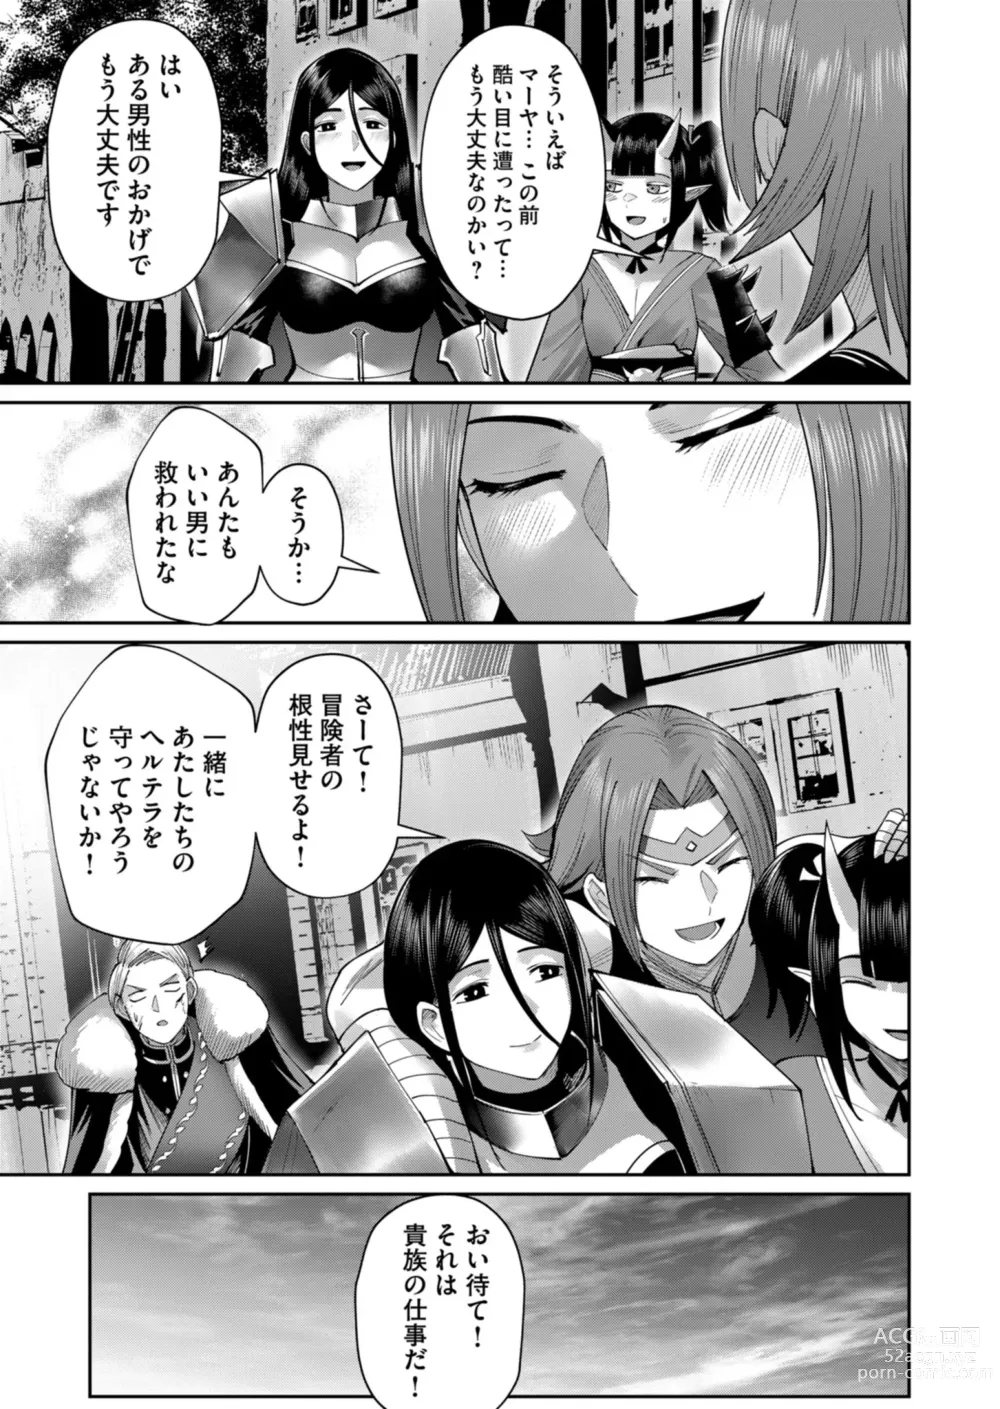 Page 161 of manga Kichiku Eiyuu Vol.06